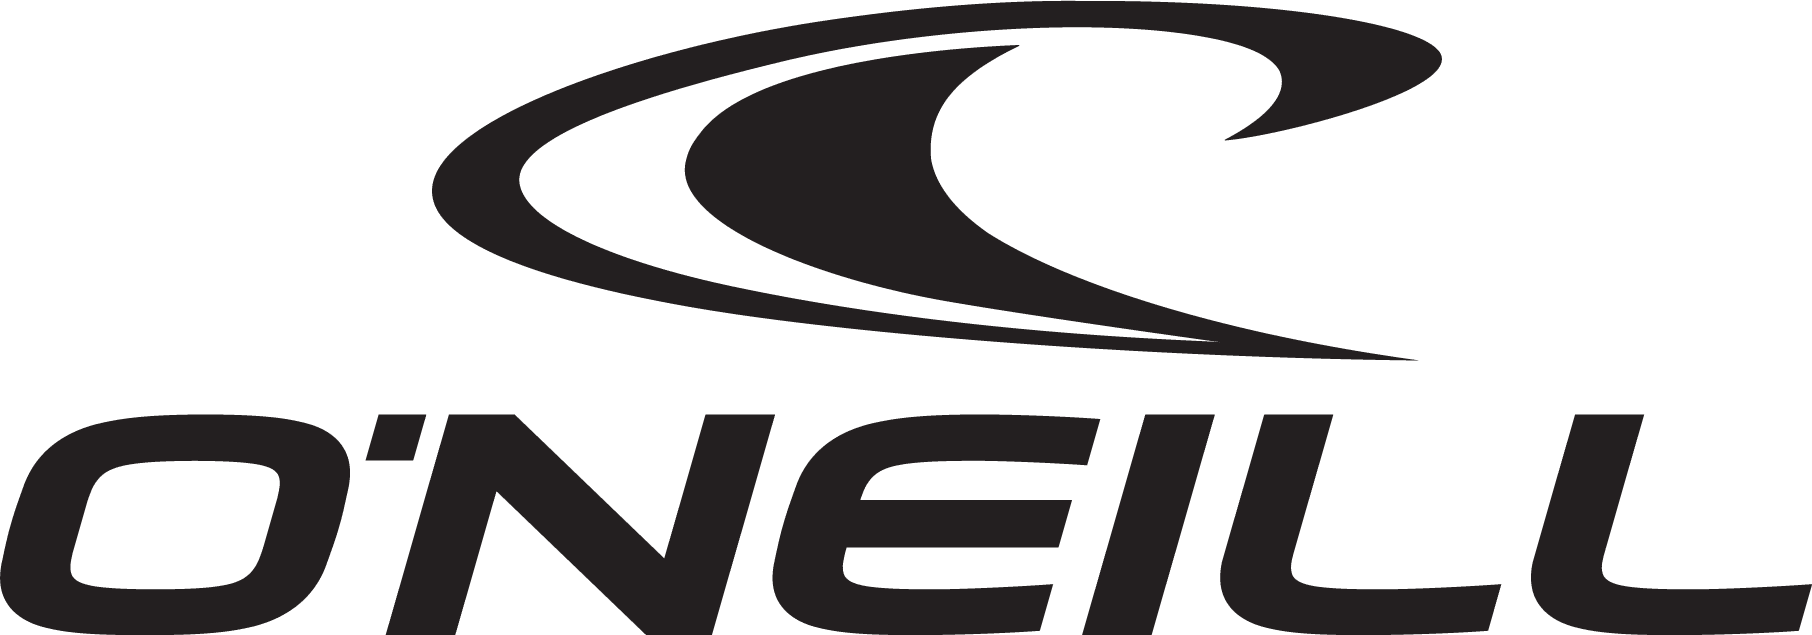 O’Neill logo